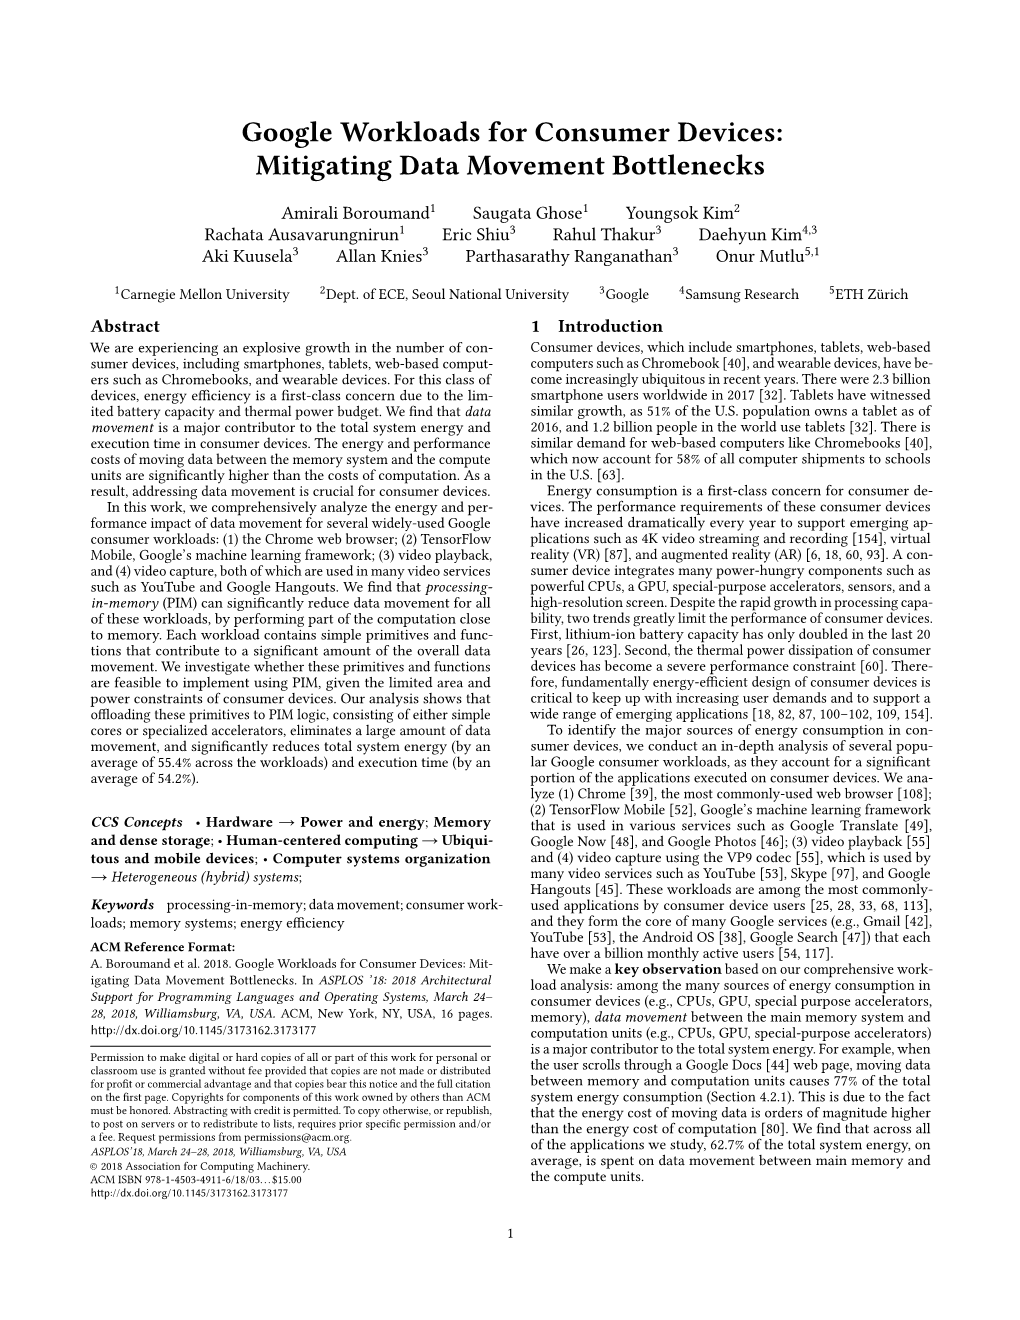 Google Workloads for Consumer Devices: Mitigating Data Movement Bottlenecks